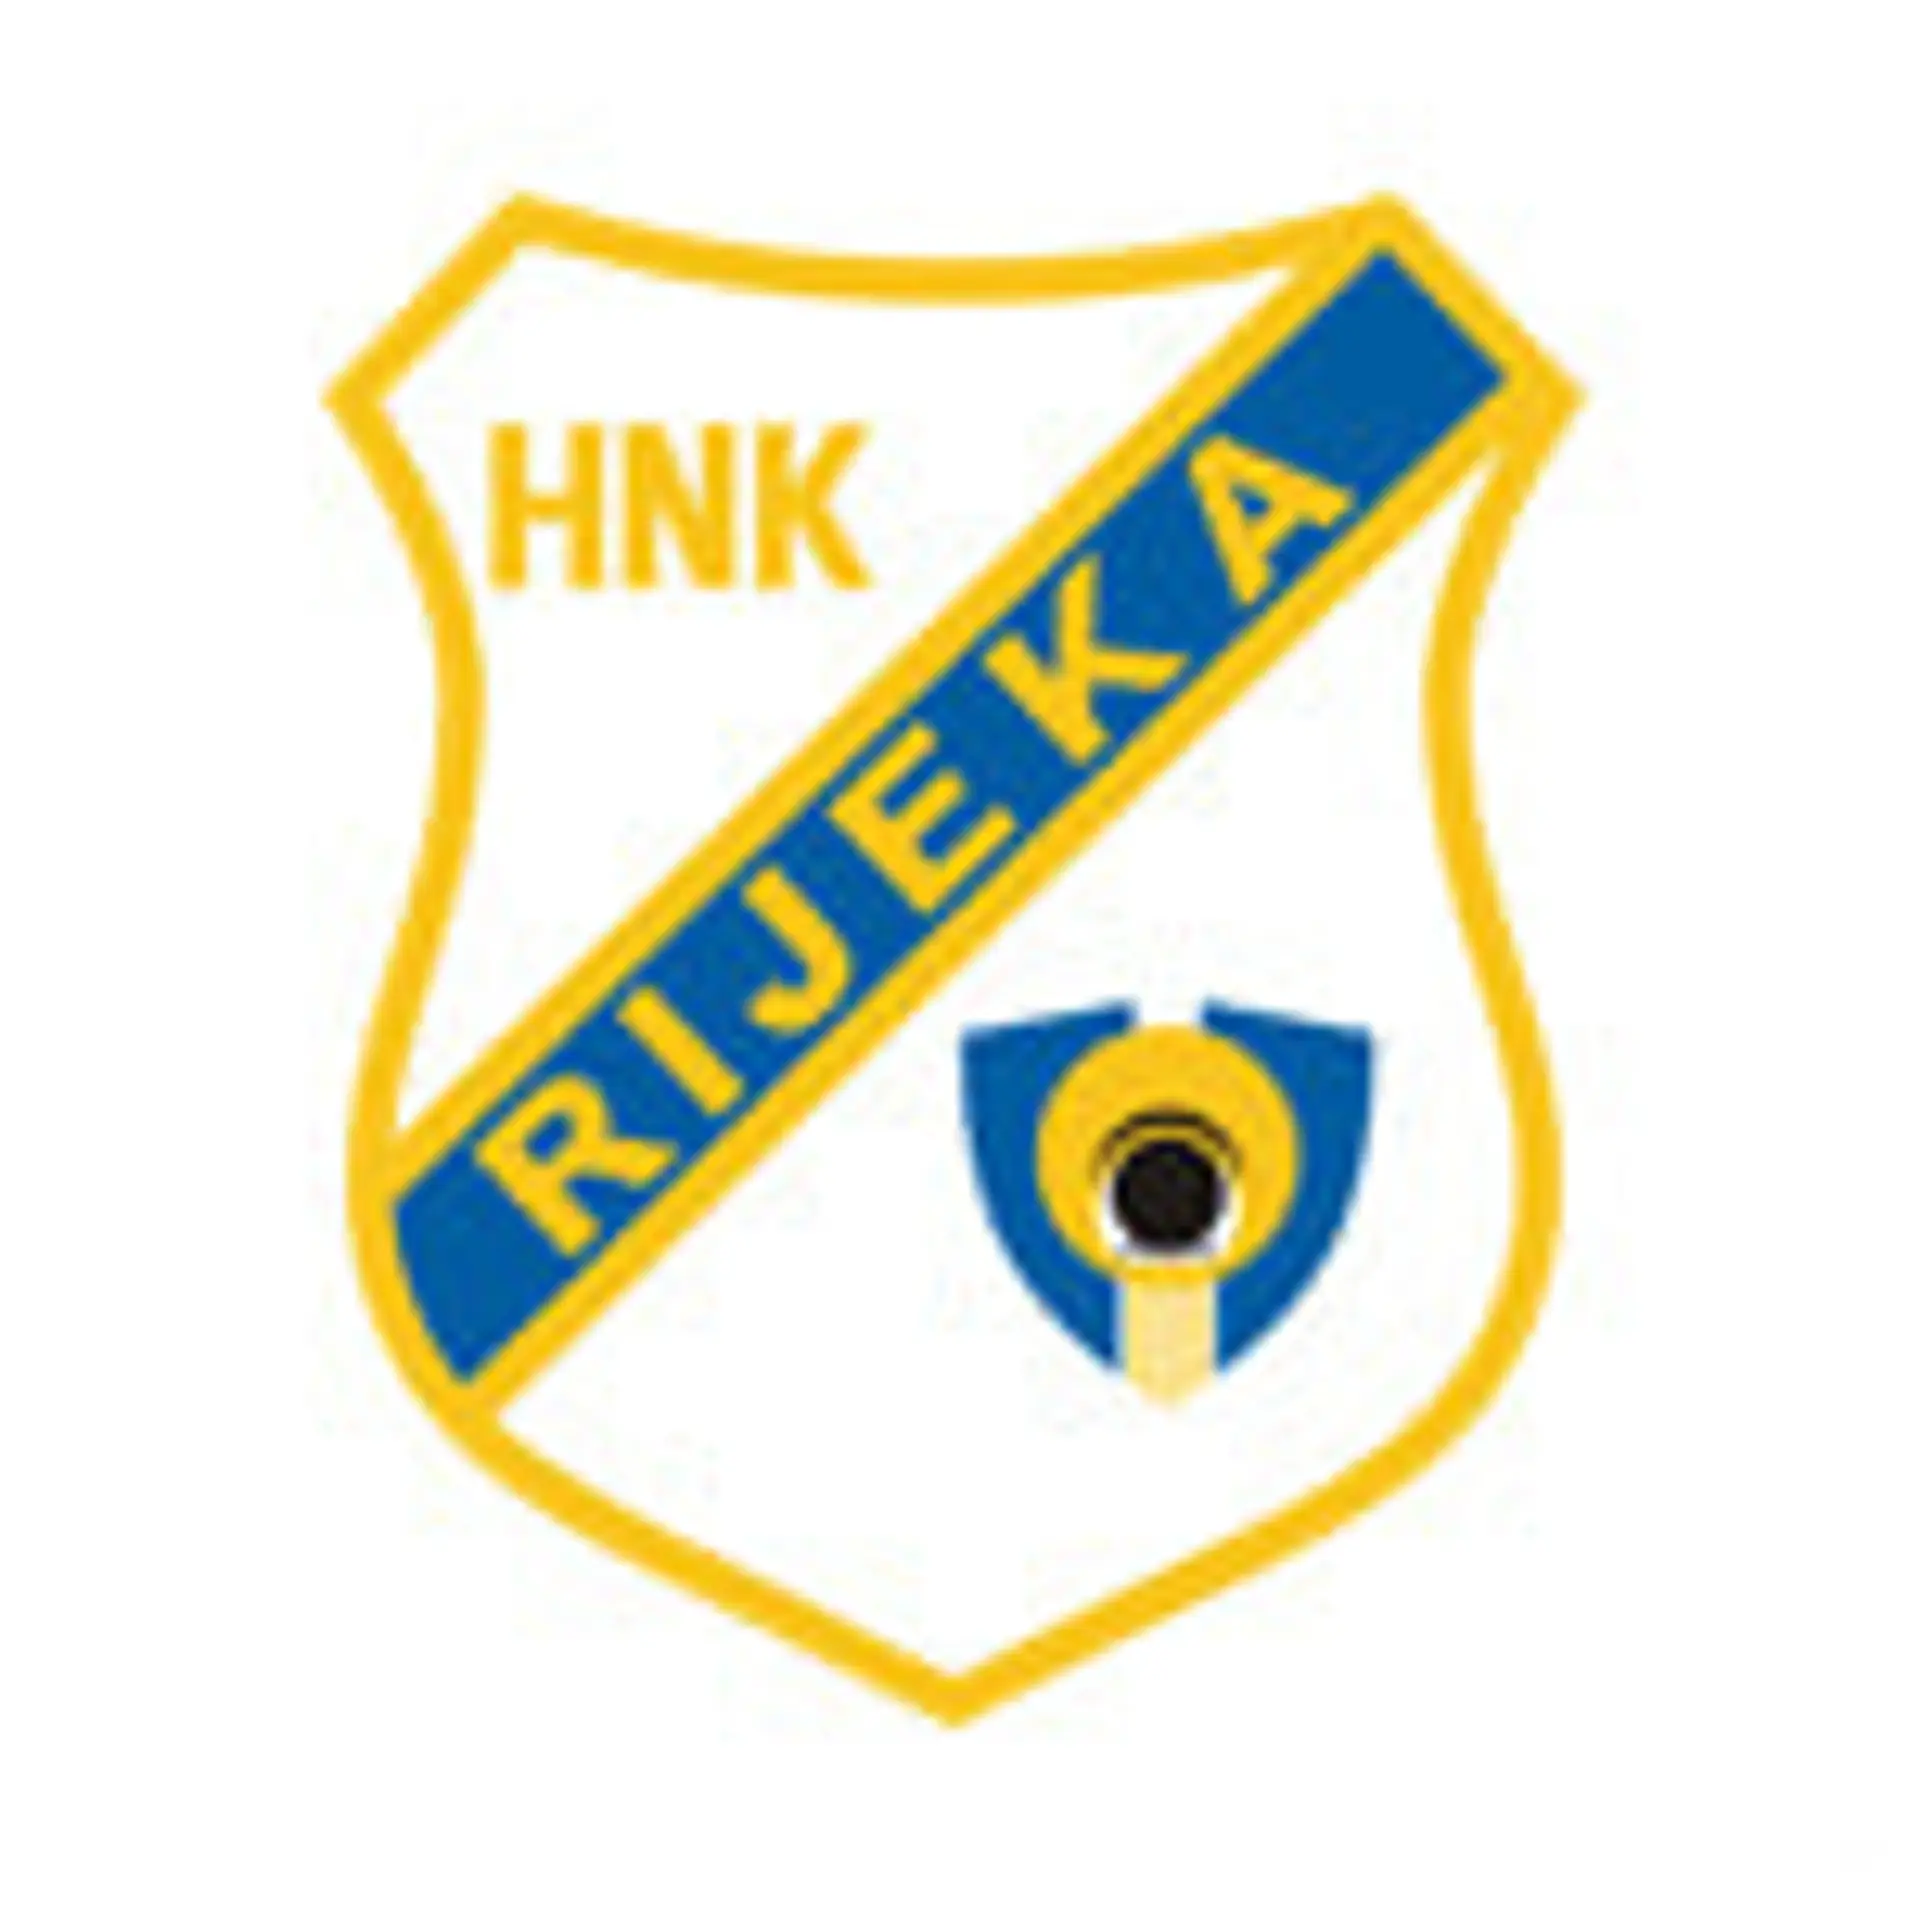 Dinamo Zagreb vs Rijeka: Live Score, Stream and H2H results 2/24/2024.  Preview match Dinamo Zagreb vs Rijeka, team, start time.